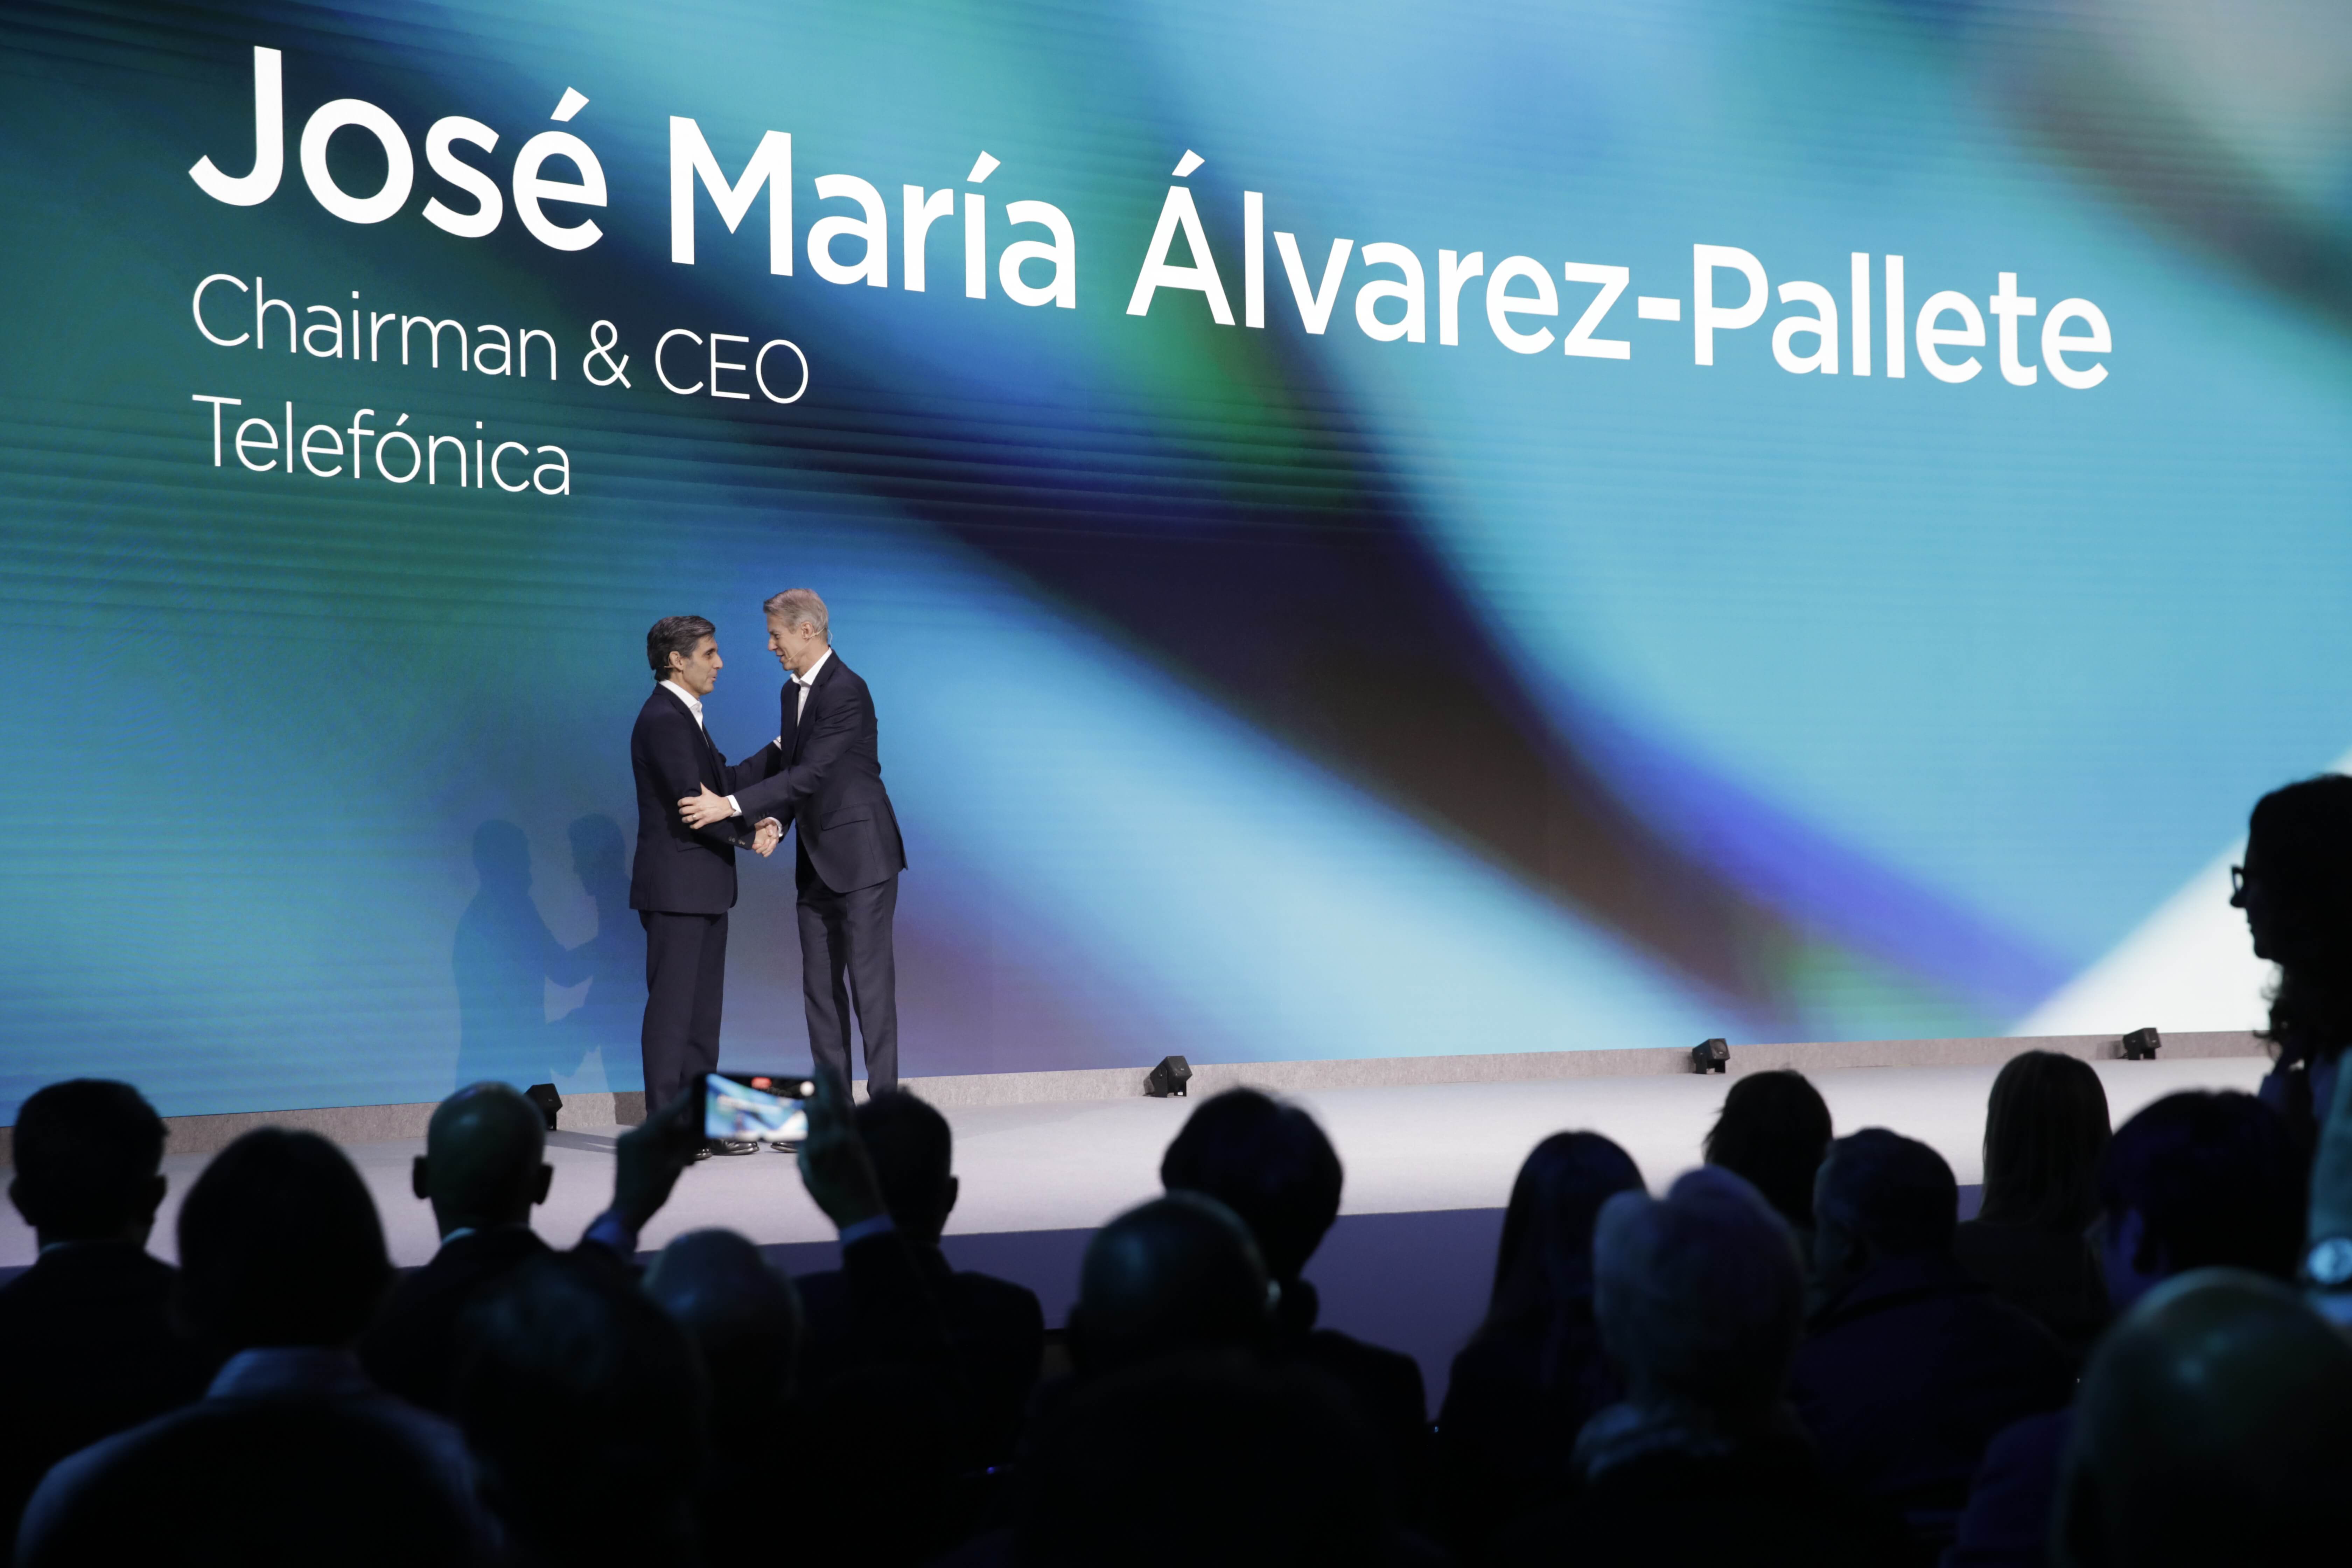 Jose Maria Alvarez-Pallete Telefonica at MWC 2023